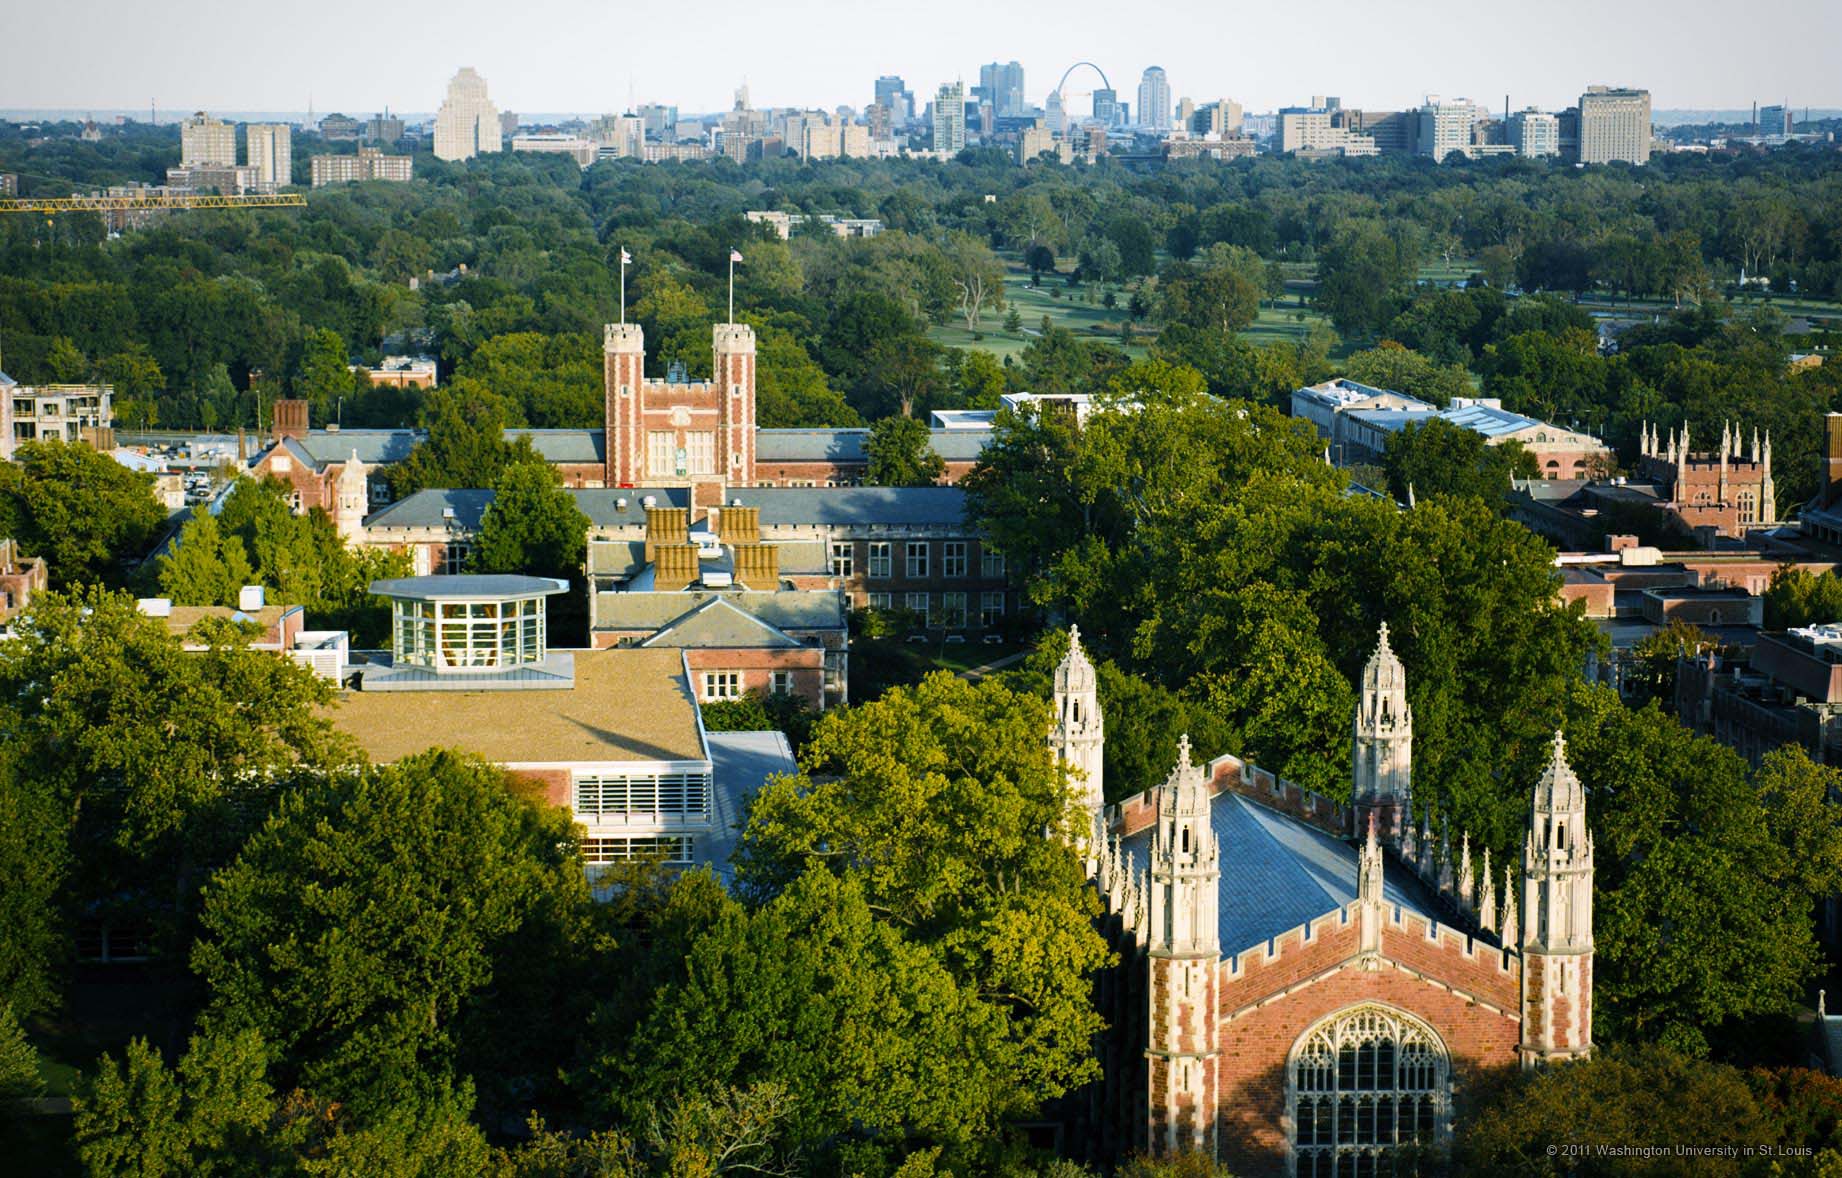 Washington University in St. Louis